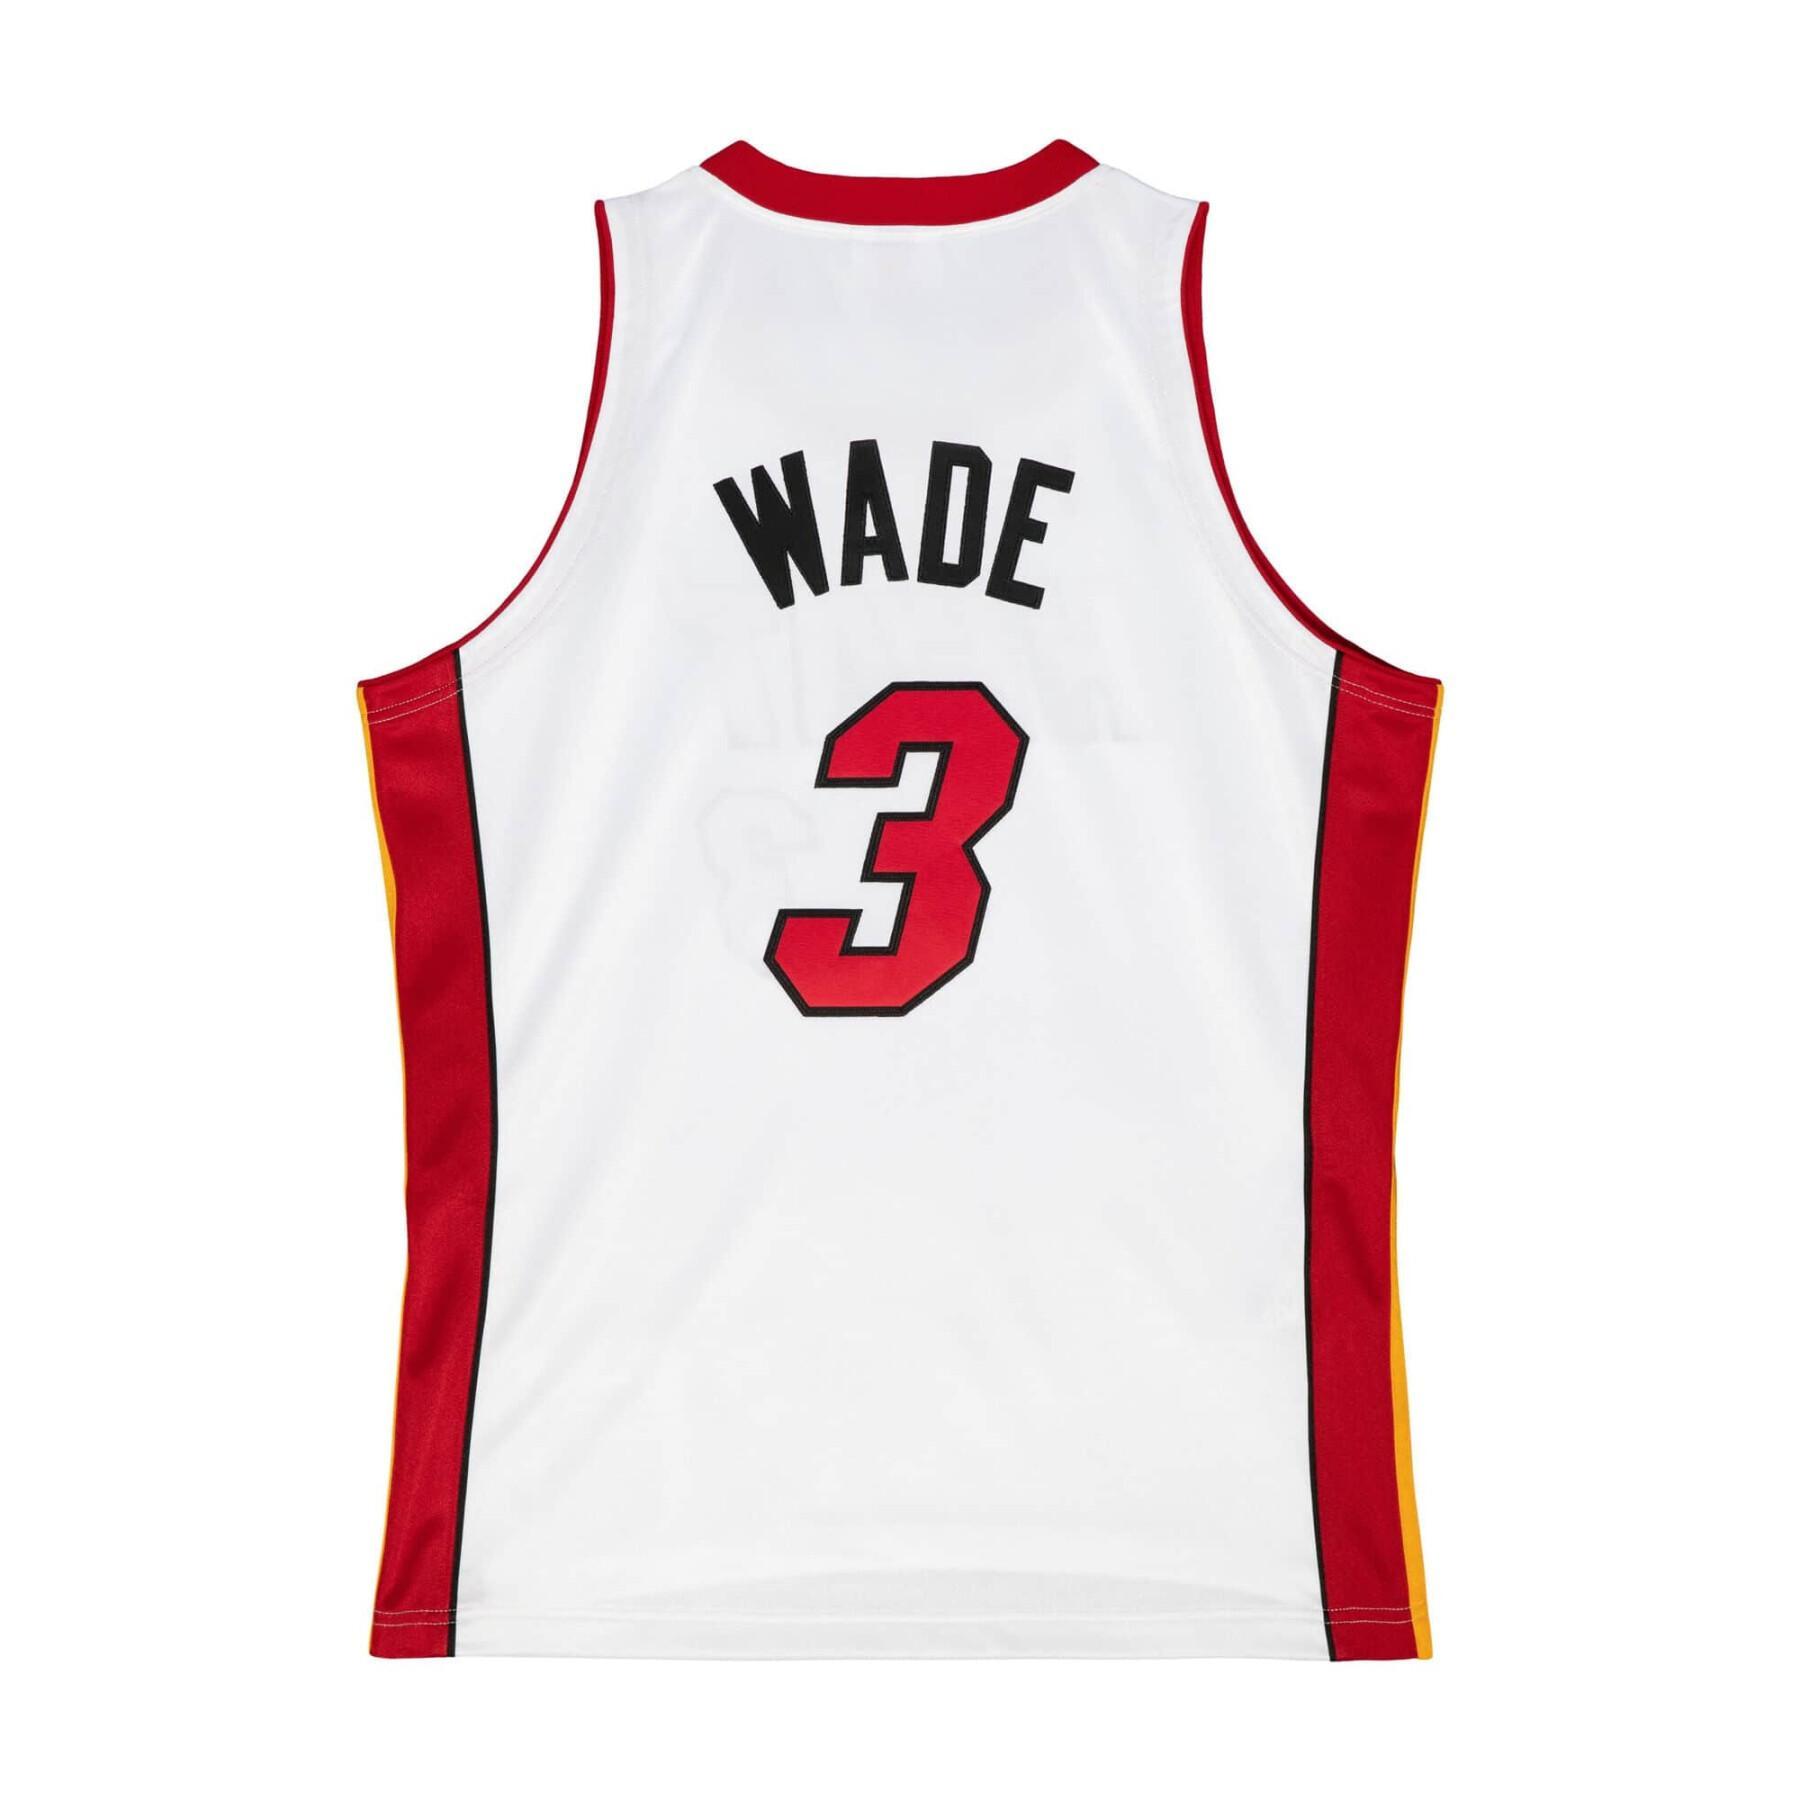 Maillot Miami Heat NBA Finals 2005 Dwyane Wade